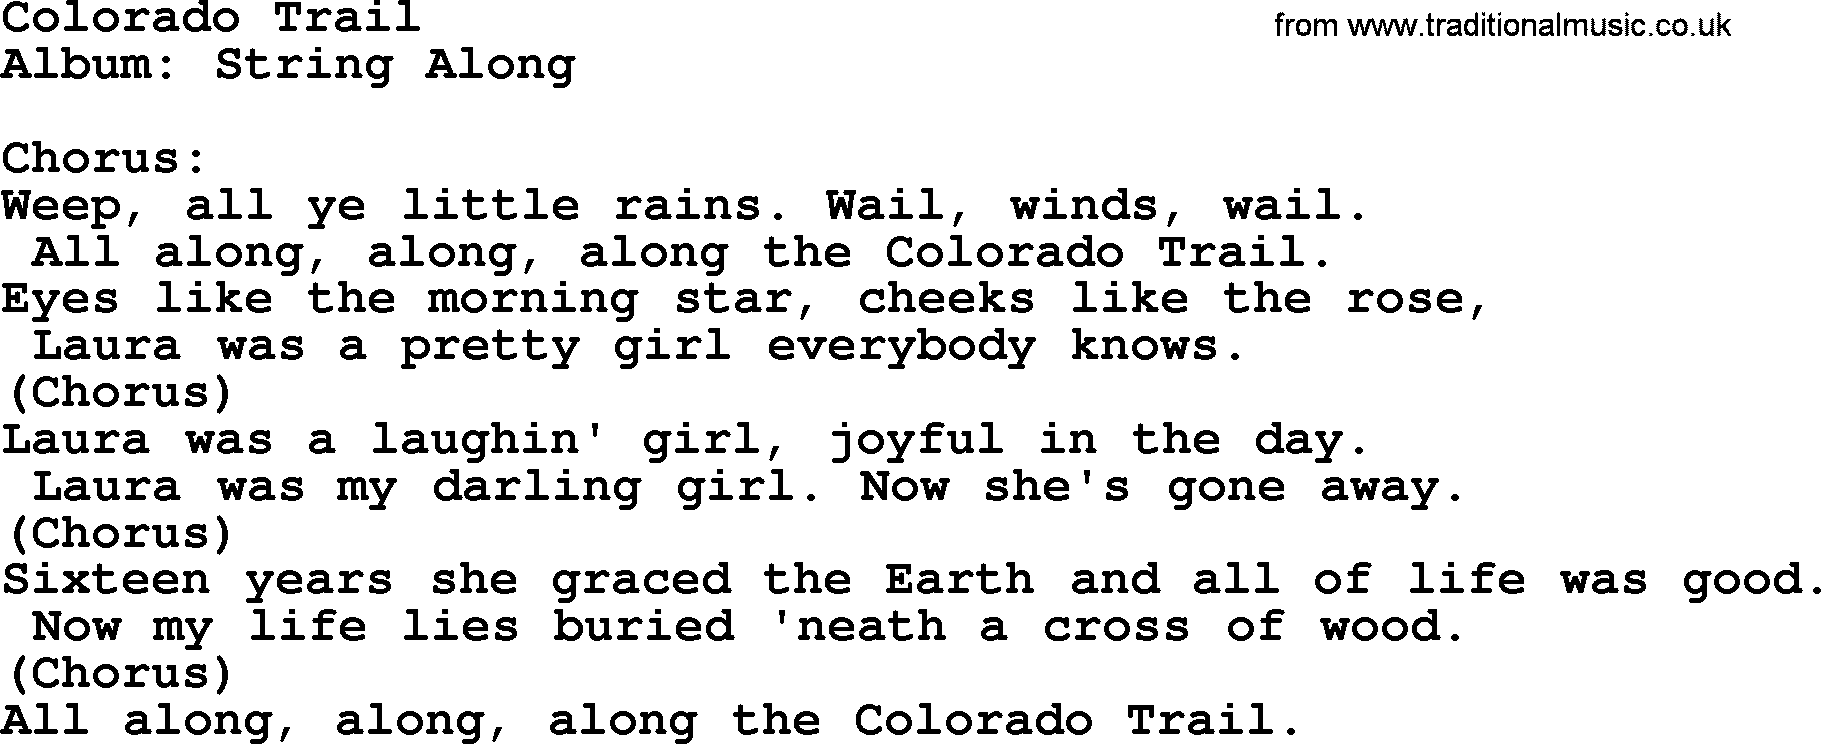 Kingston Trio song Colorado Trail, lyrics